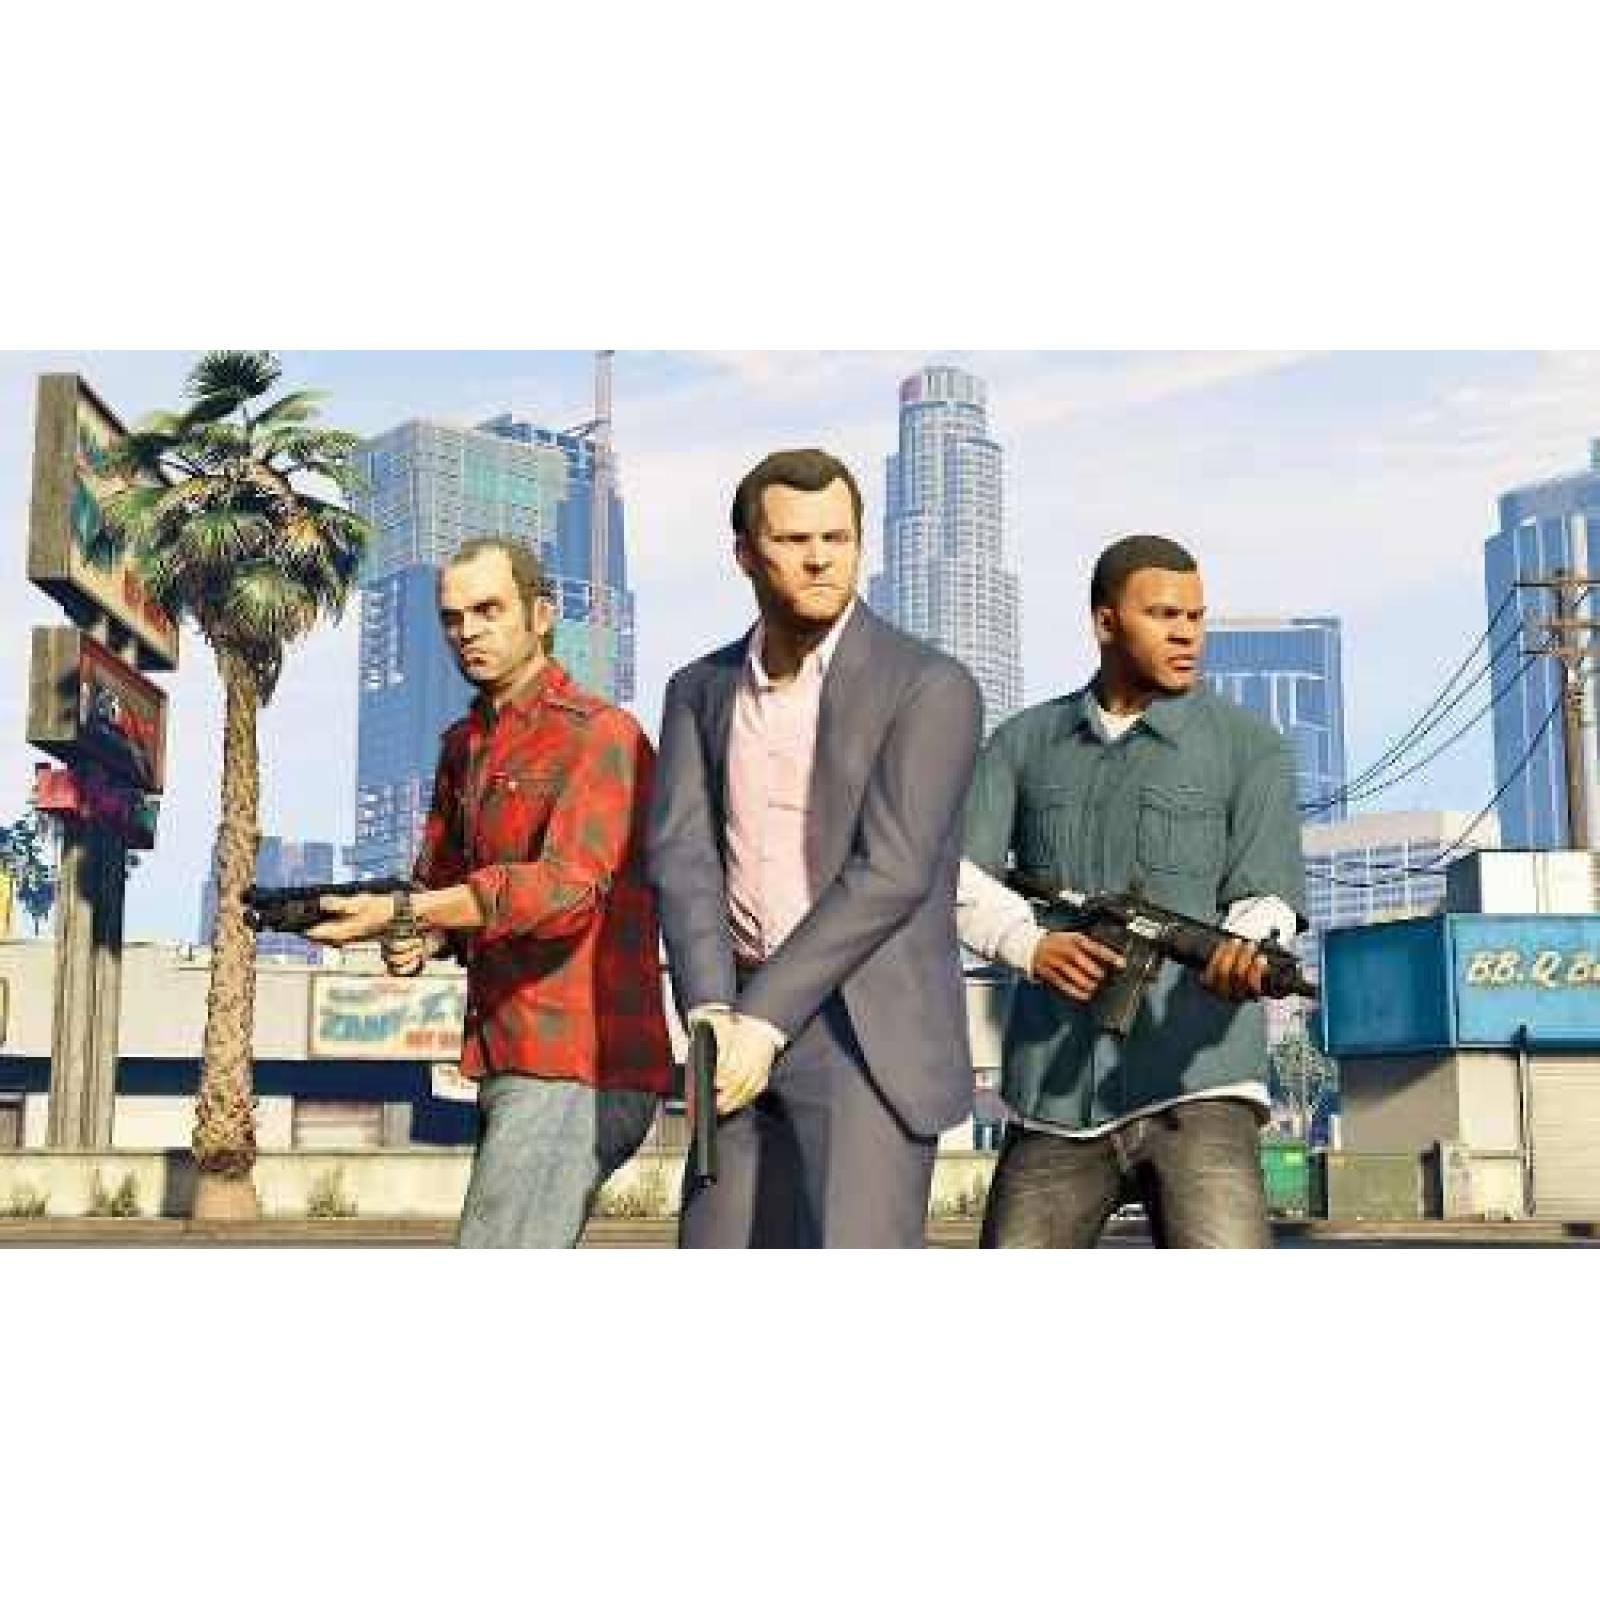 Grand Theft Auto V Xbox One S001 